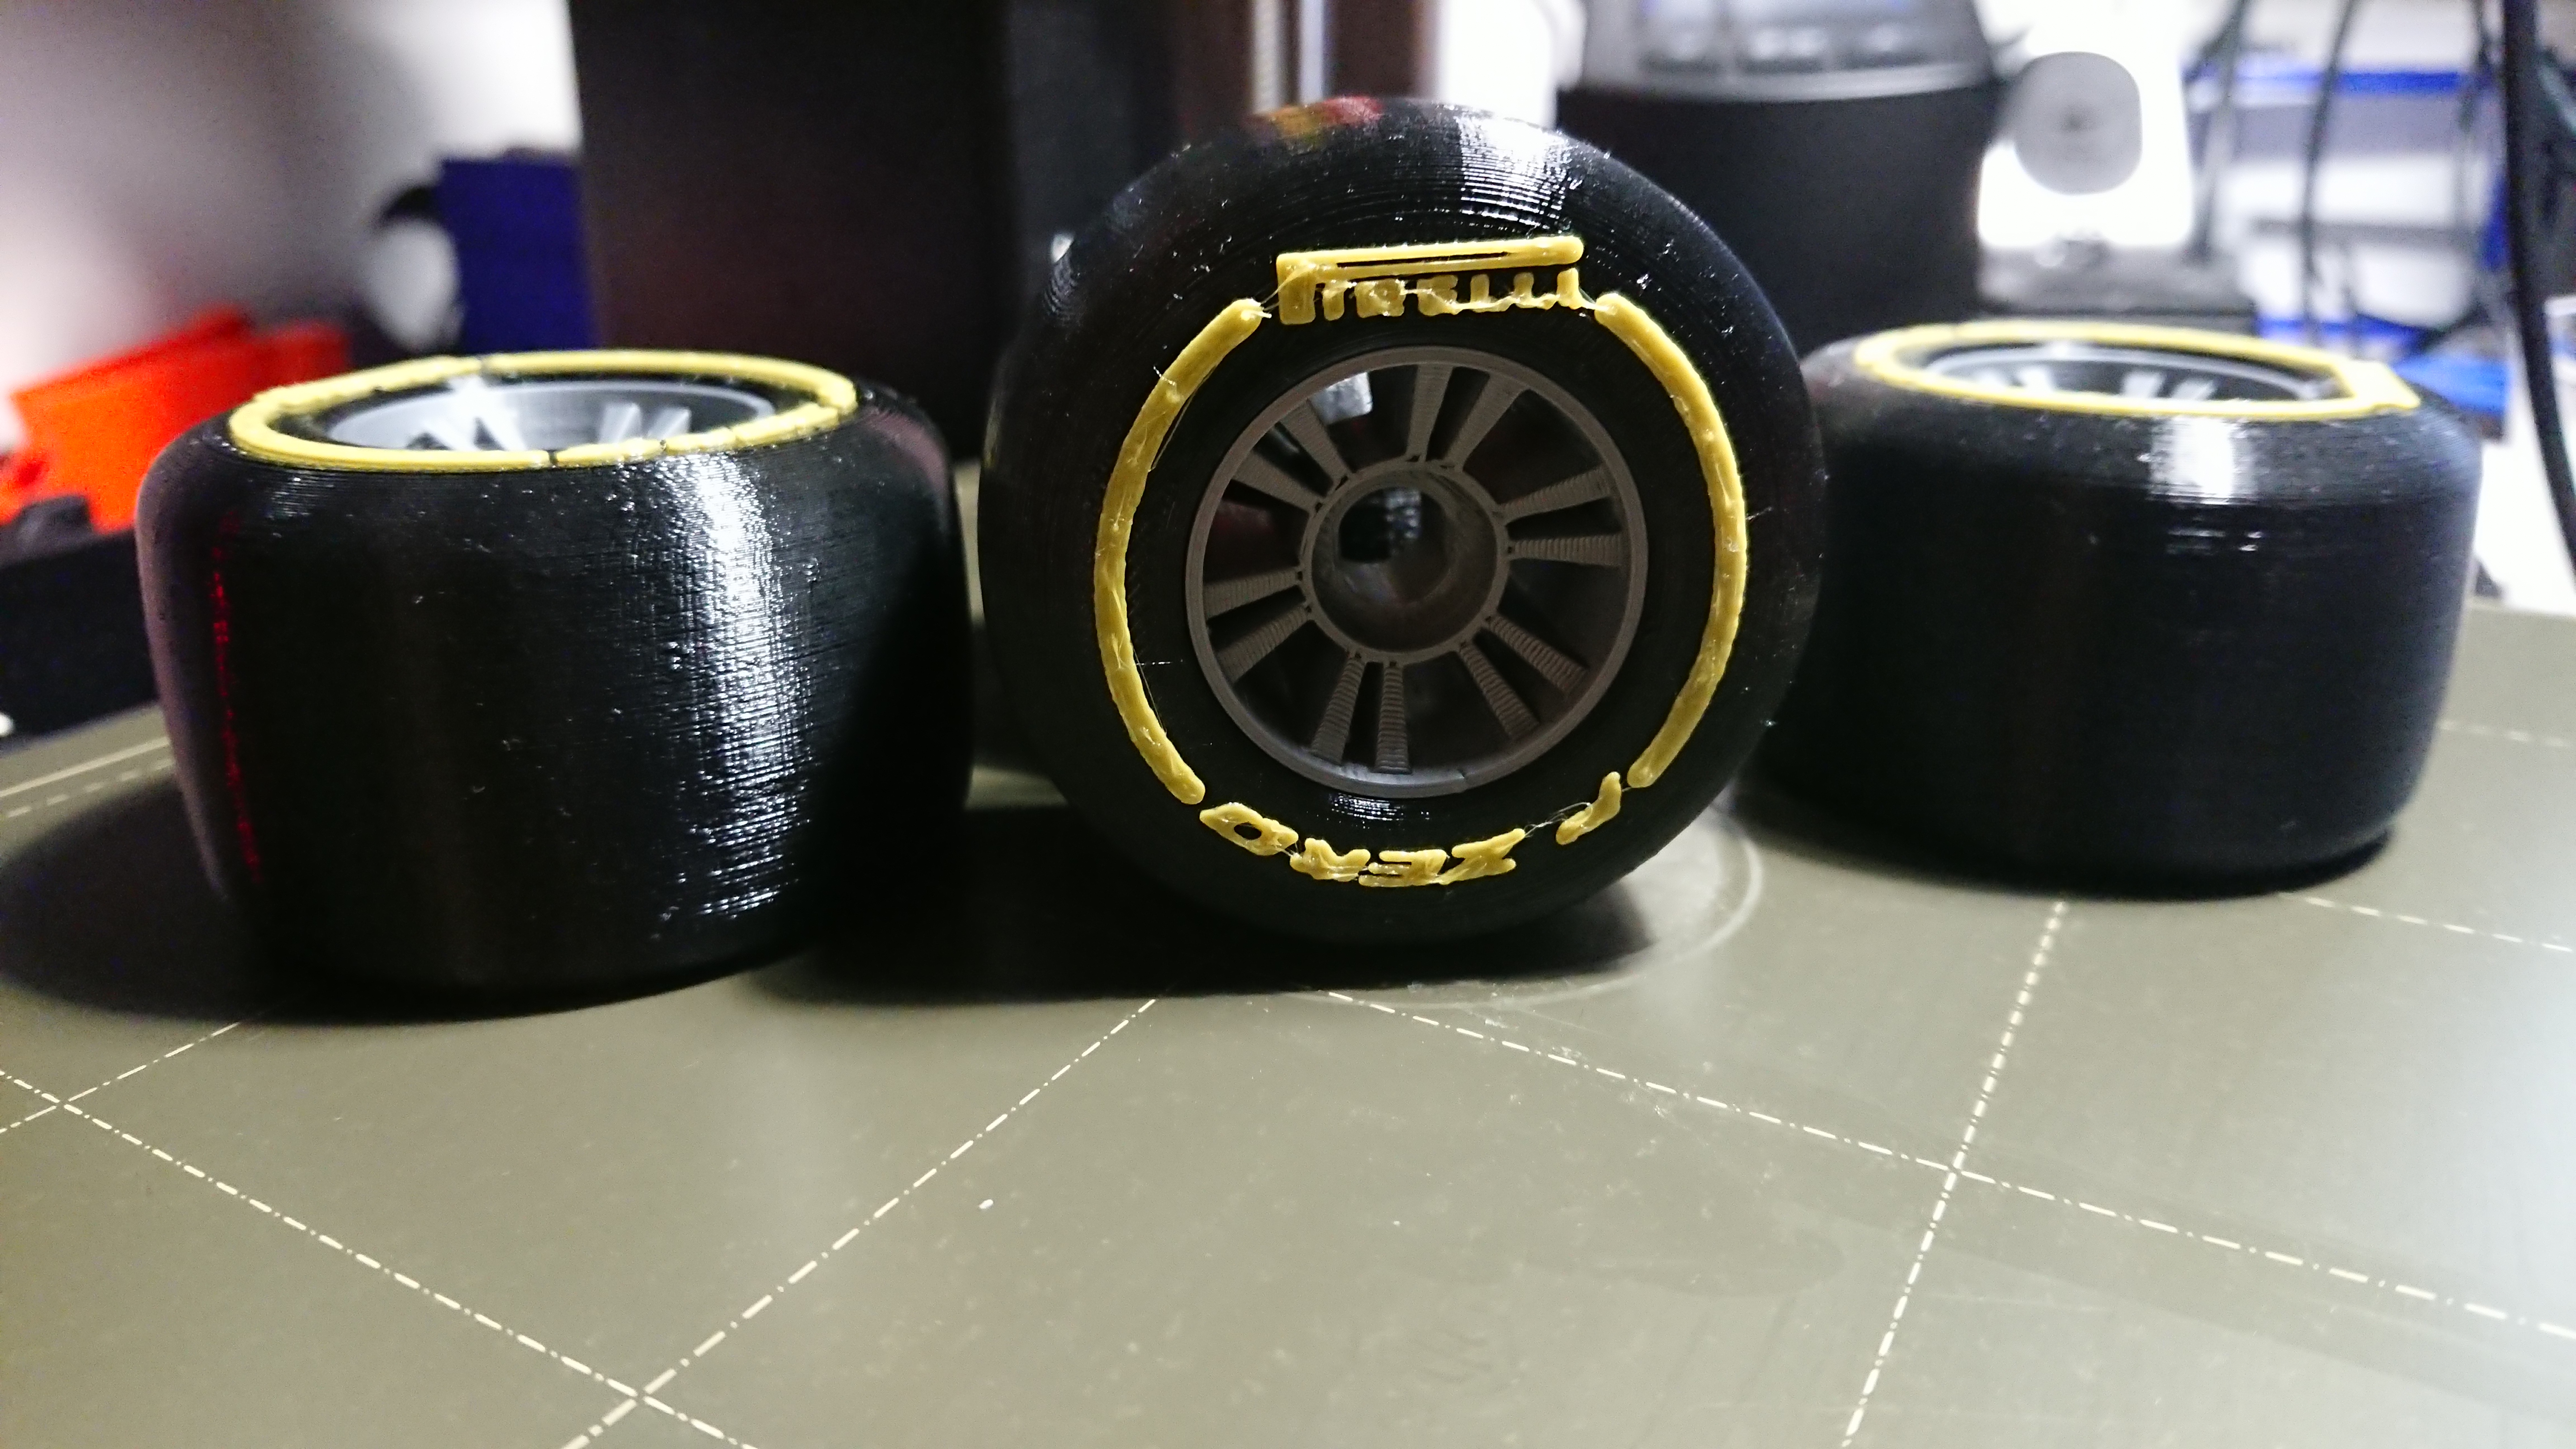 OpenRC F1 Pirelli P-Zero branded tire print without MMU